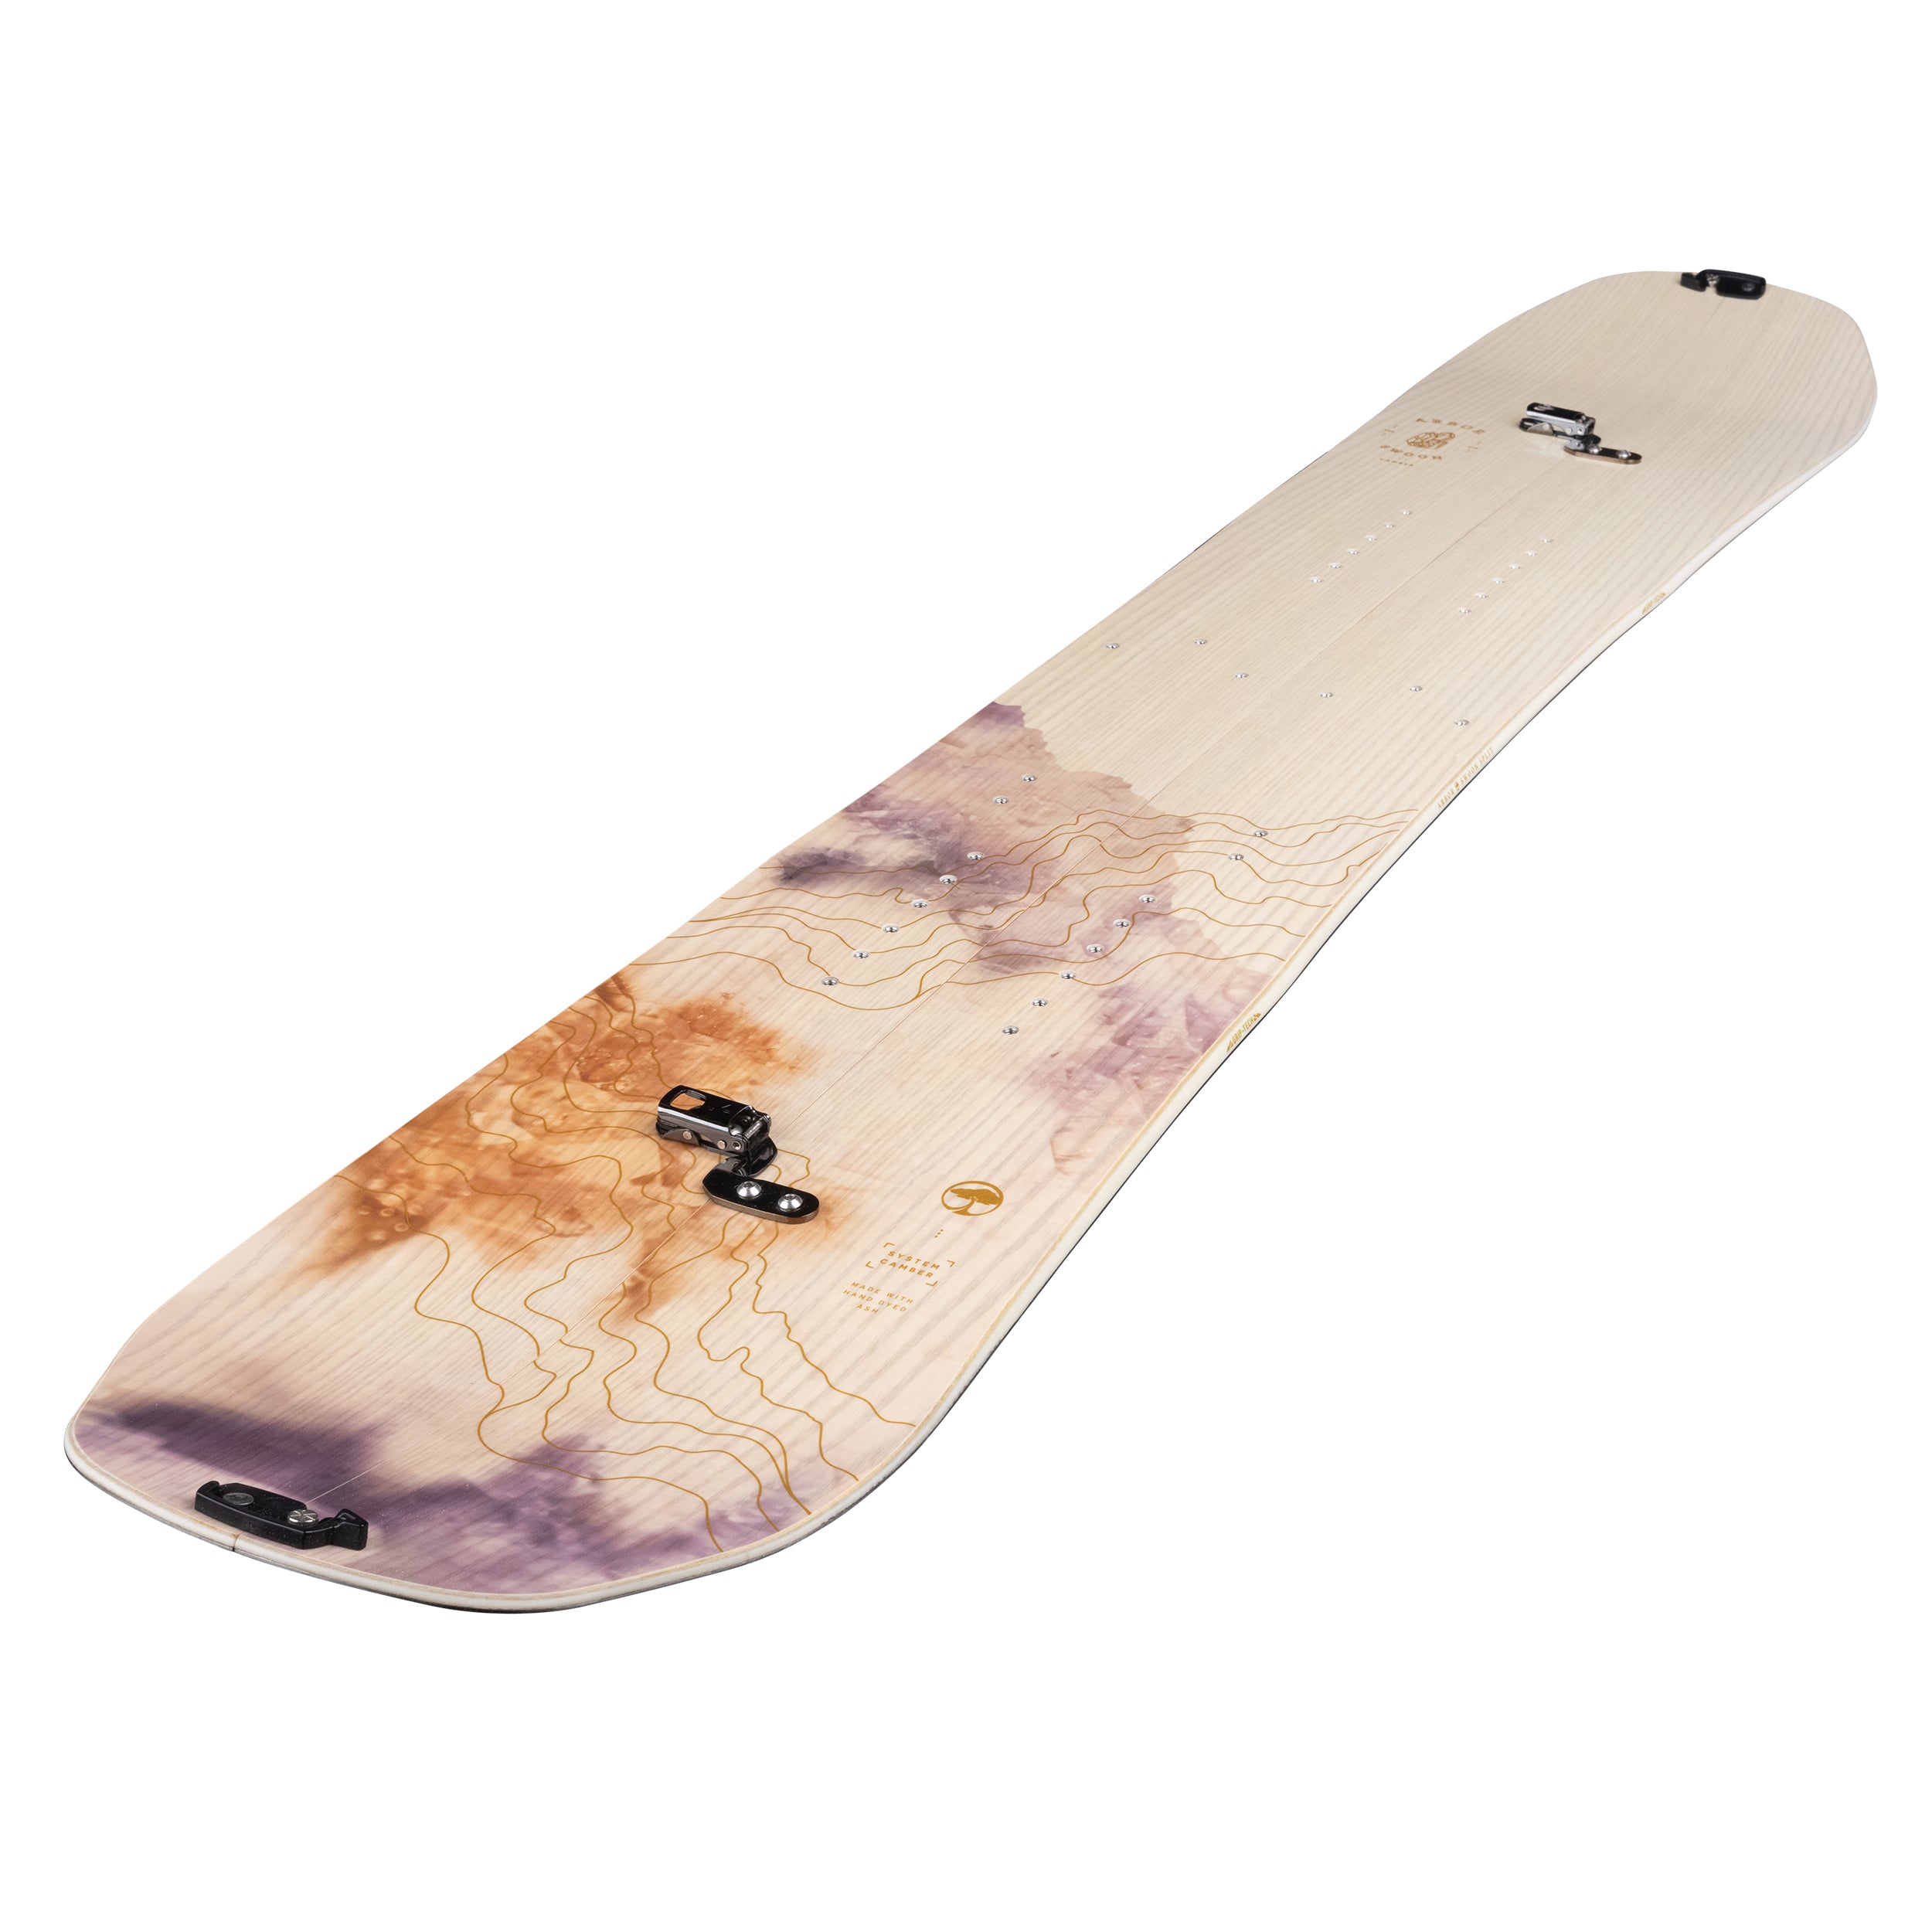 Arbor Snowboards - Swoon Splitboard Camber – Arbor Collective